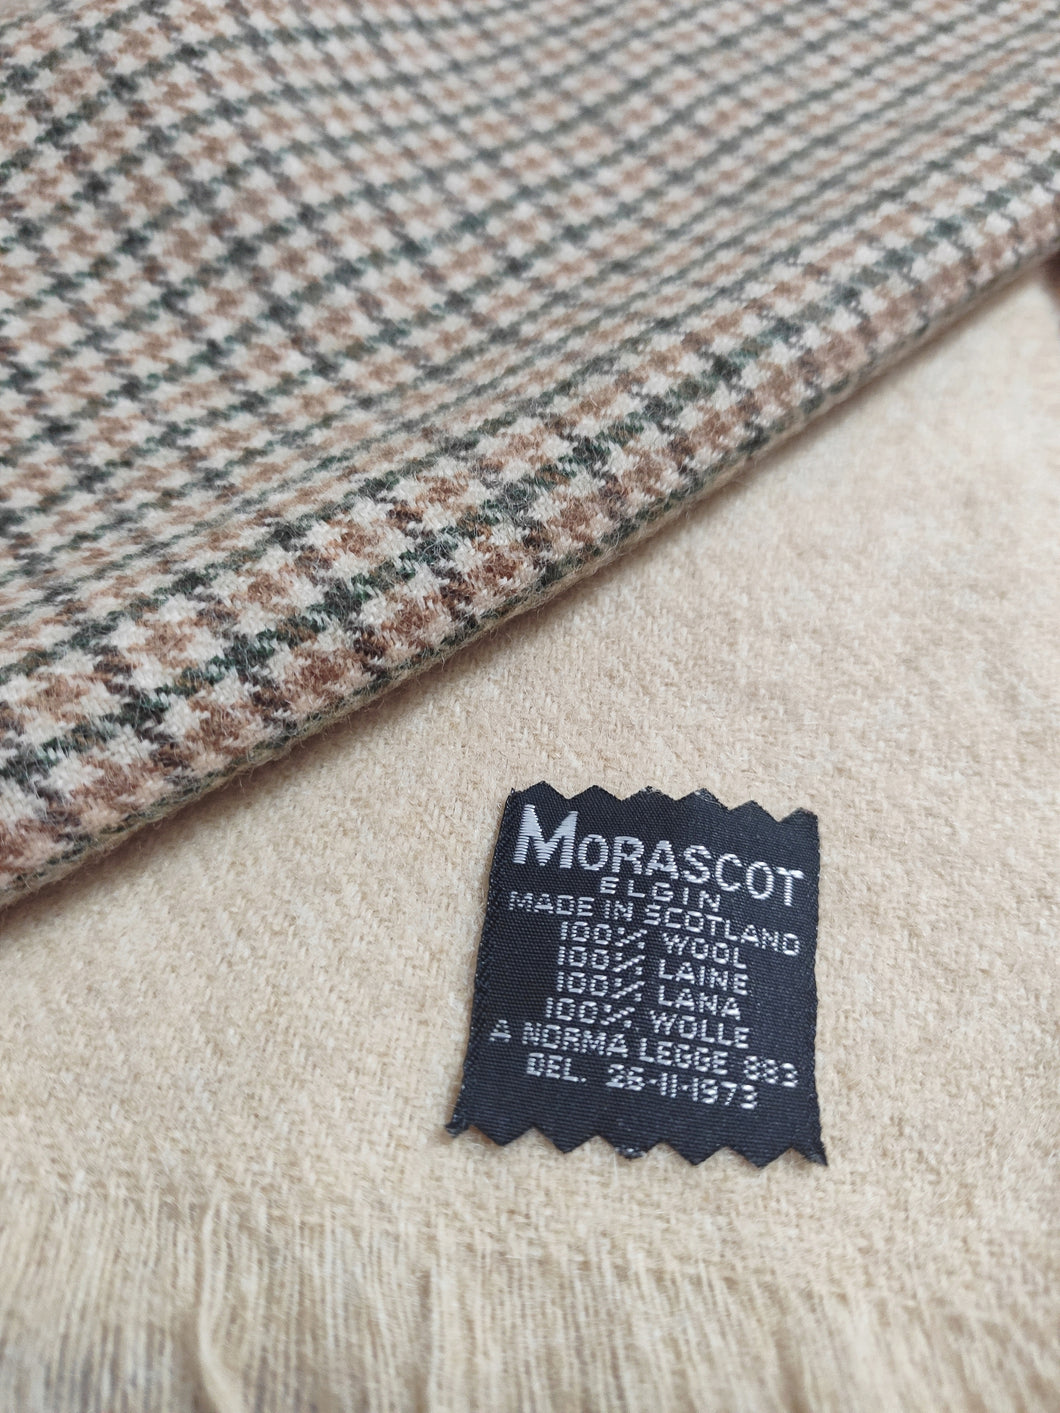 Morascot Elgin écharpe unie beige 100% laine Made in Scotland